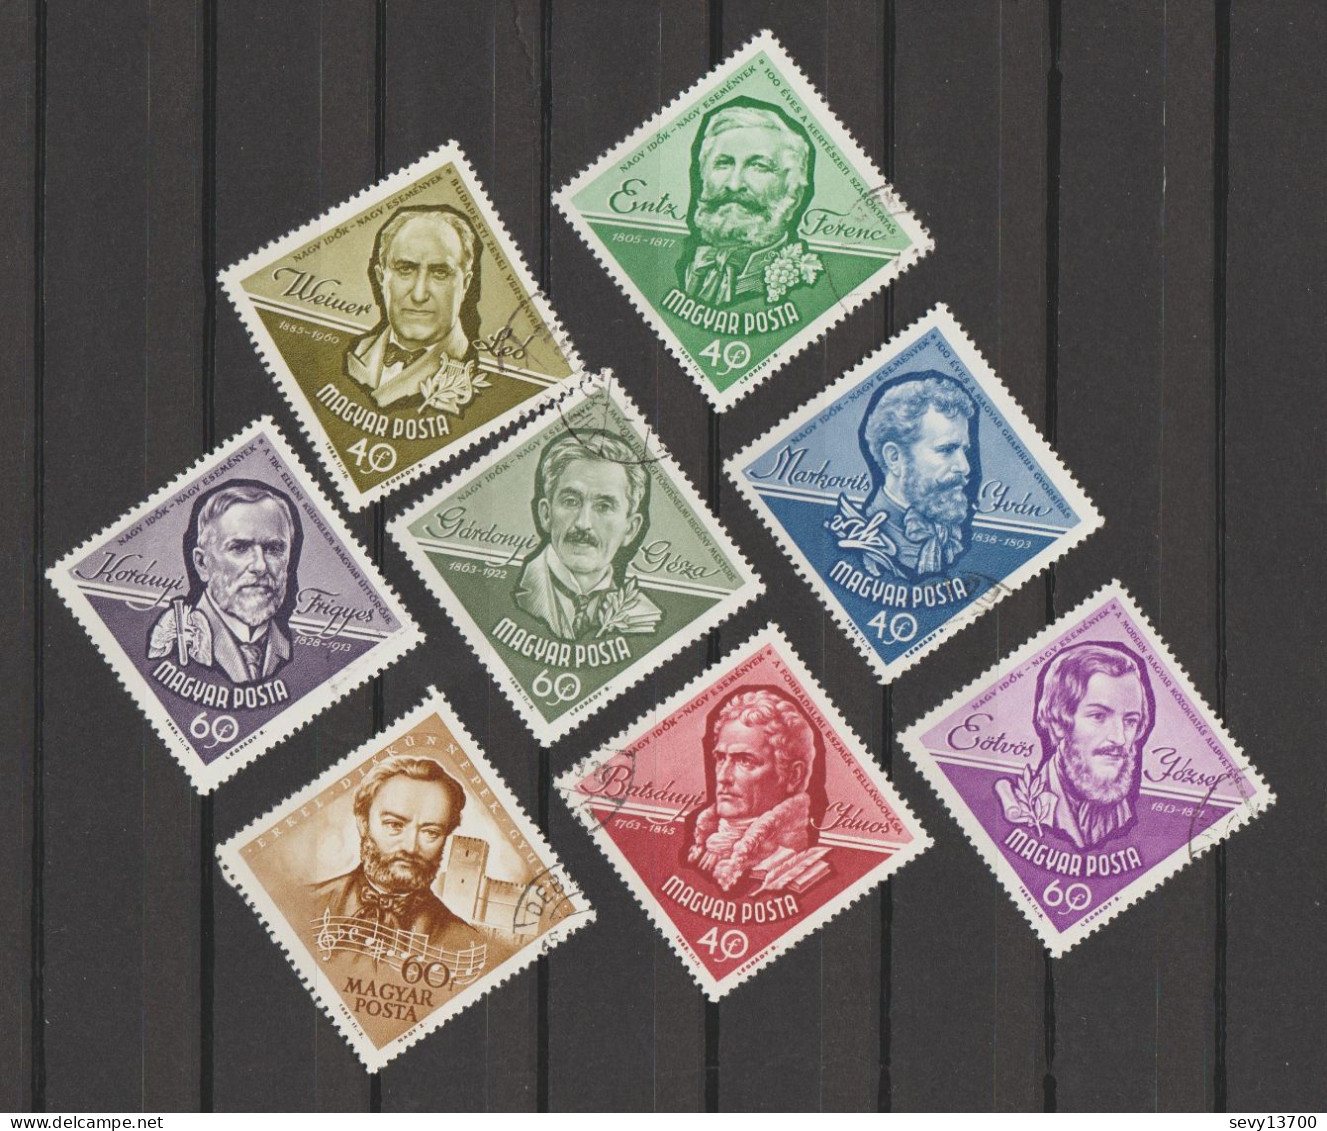 Hongrie - Magyar Posta - lot de 50 timbres